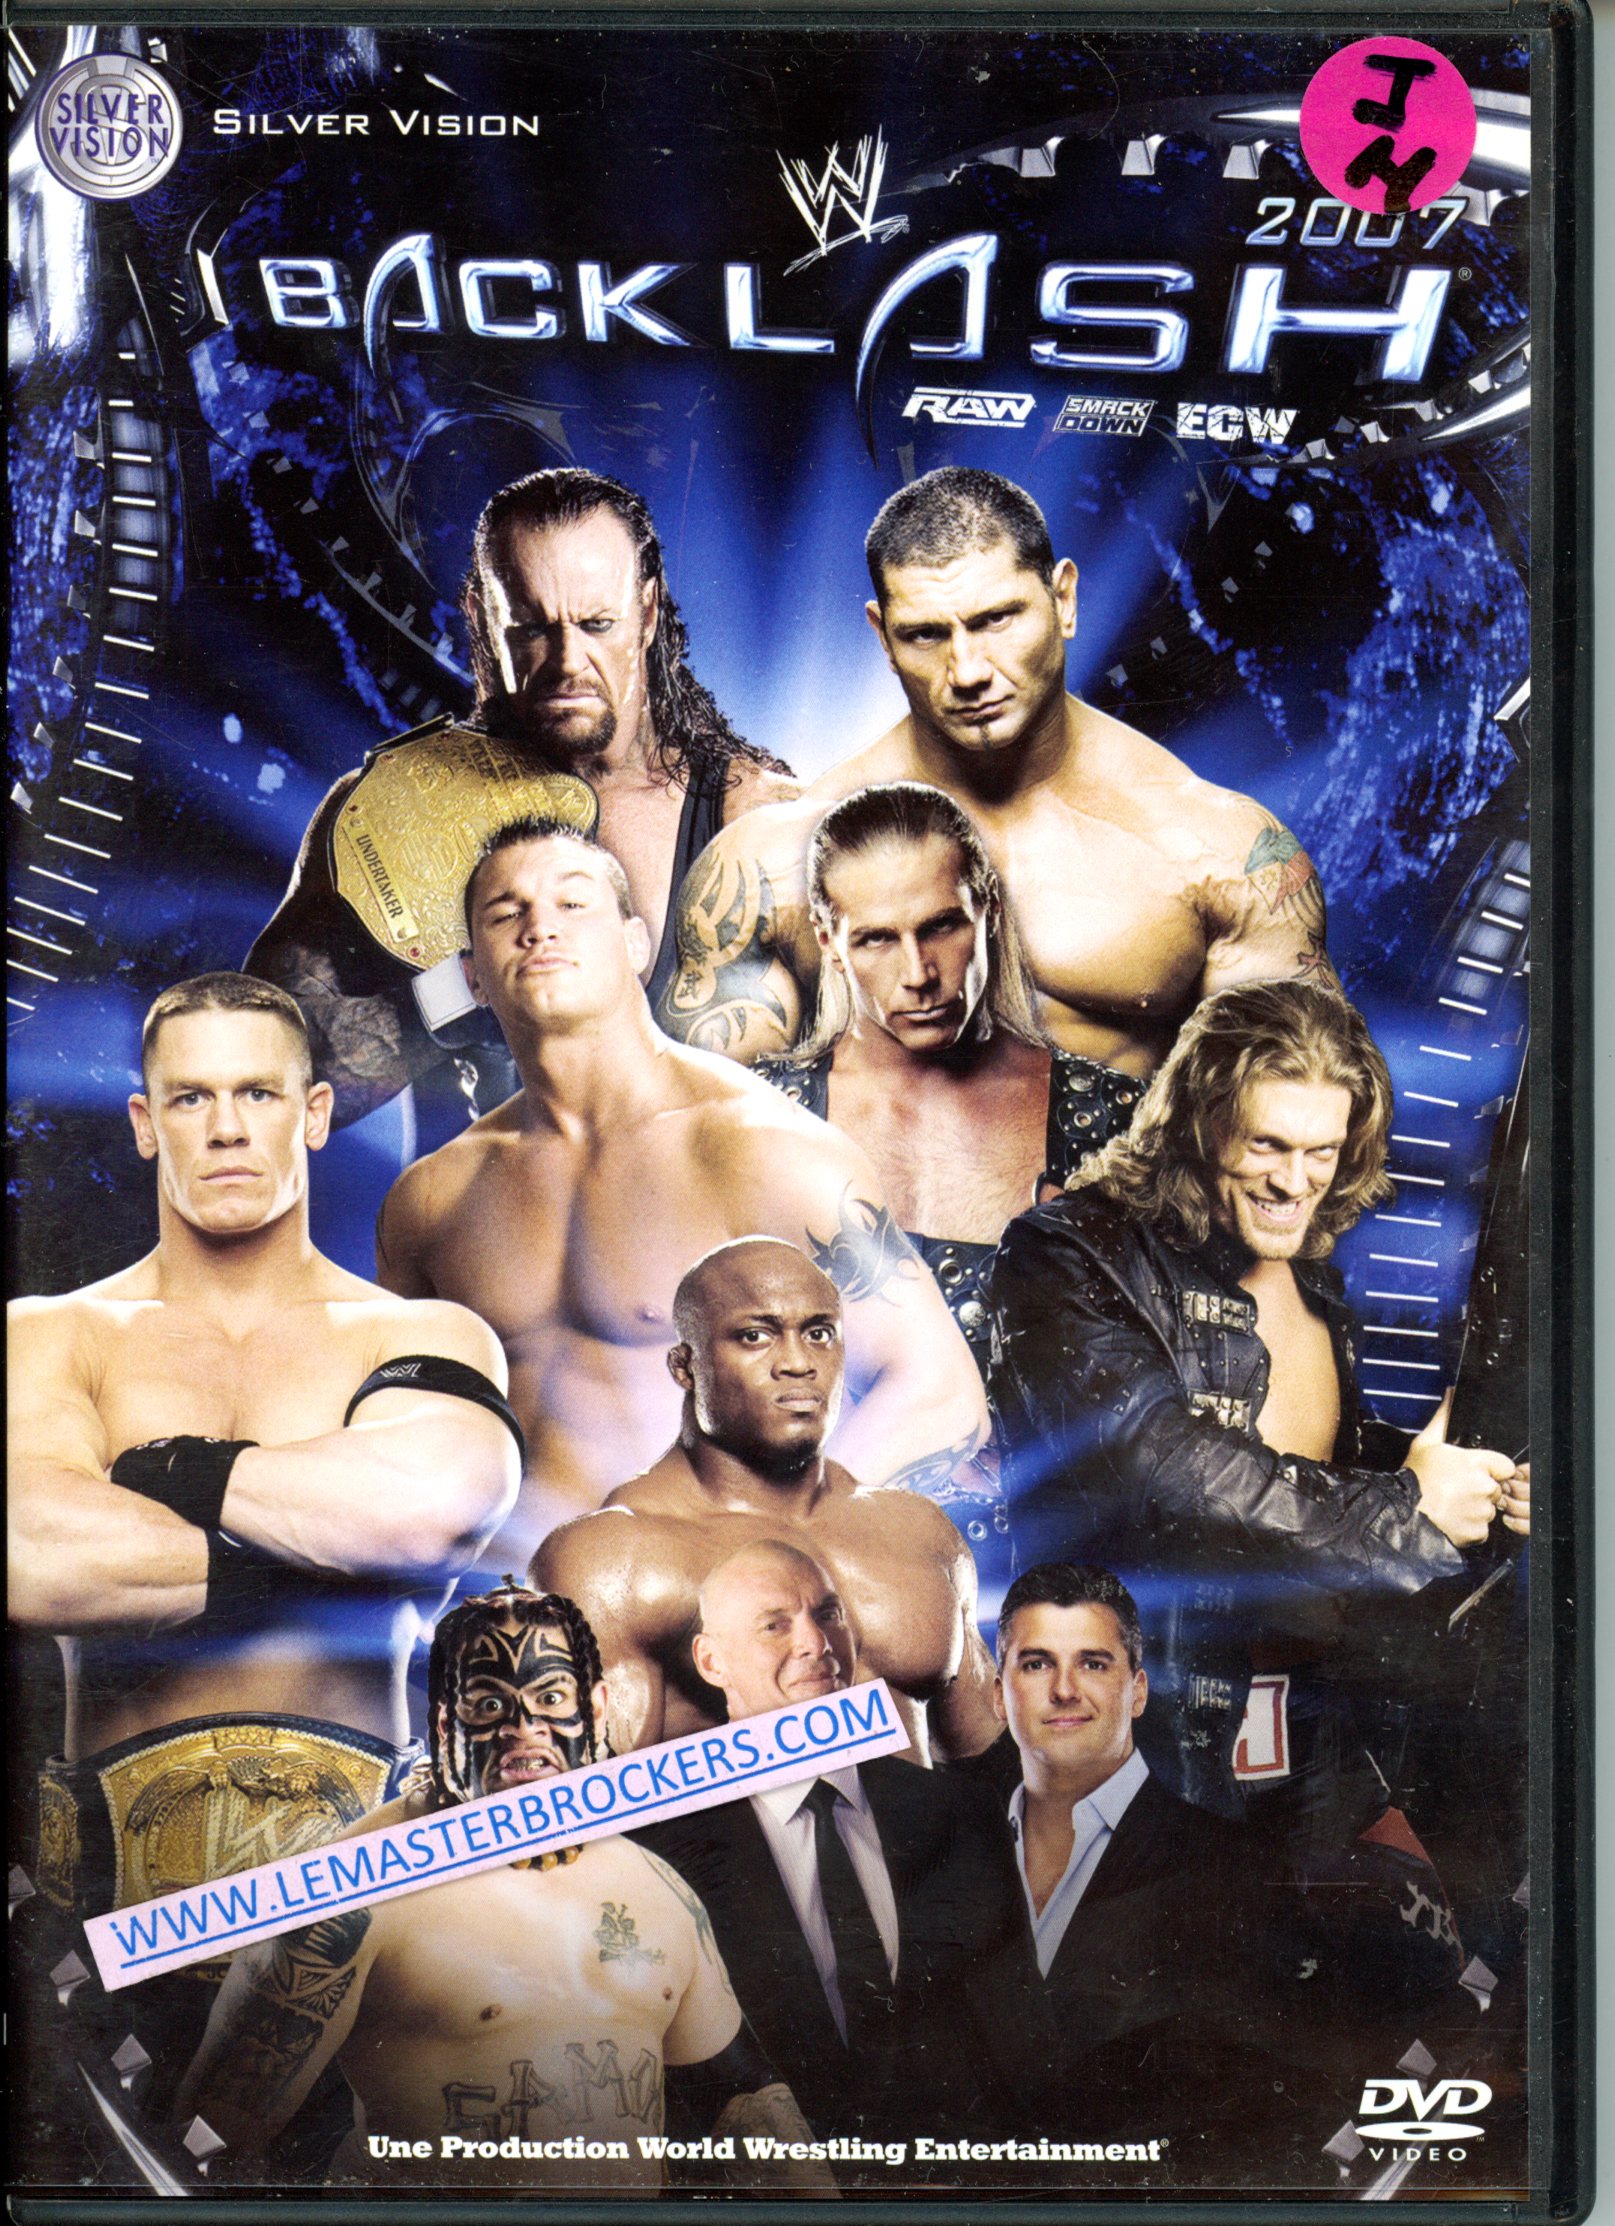 BLACK LASH 2007 DVD  CATCH WWE